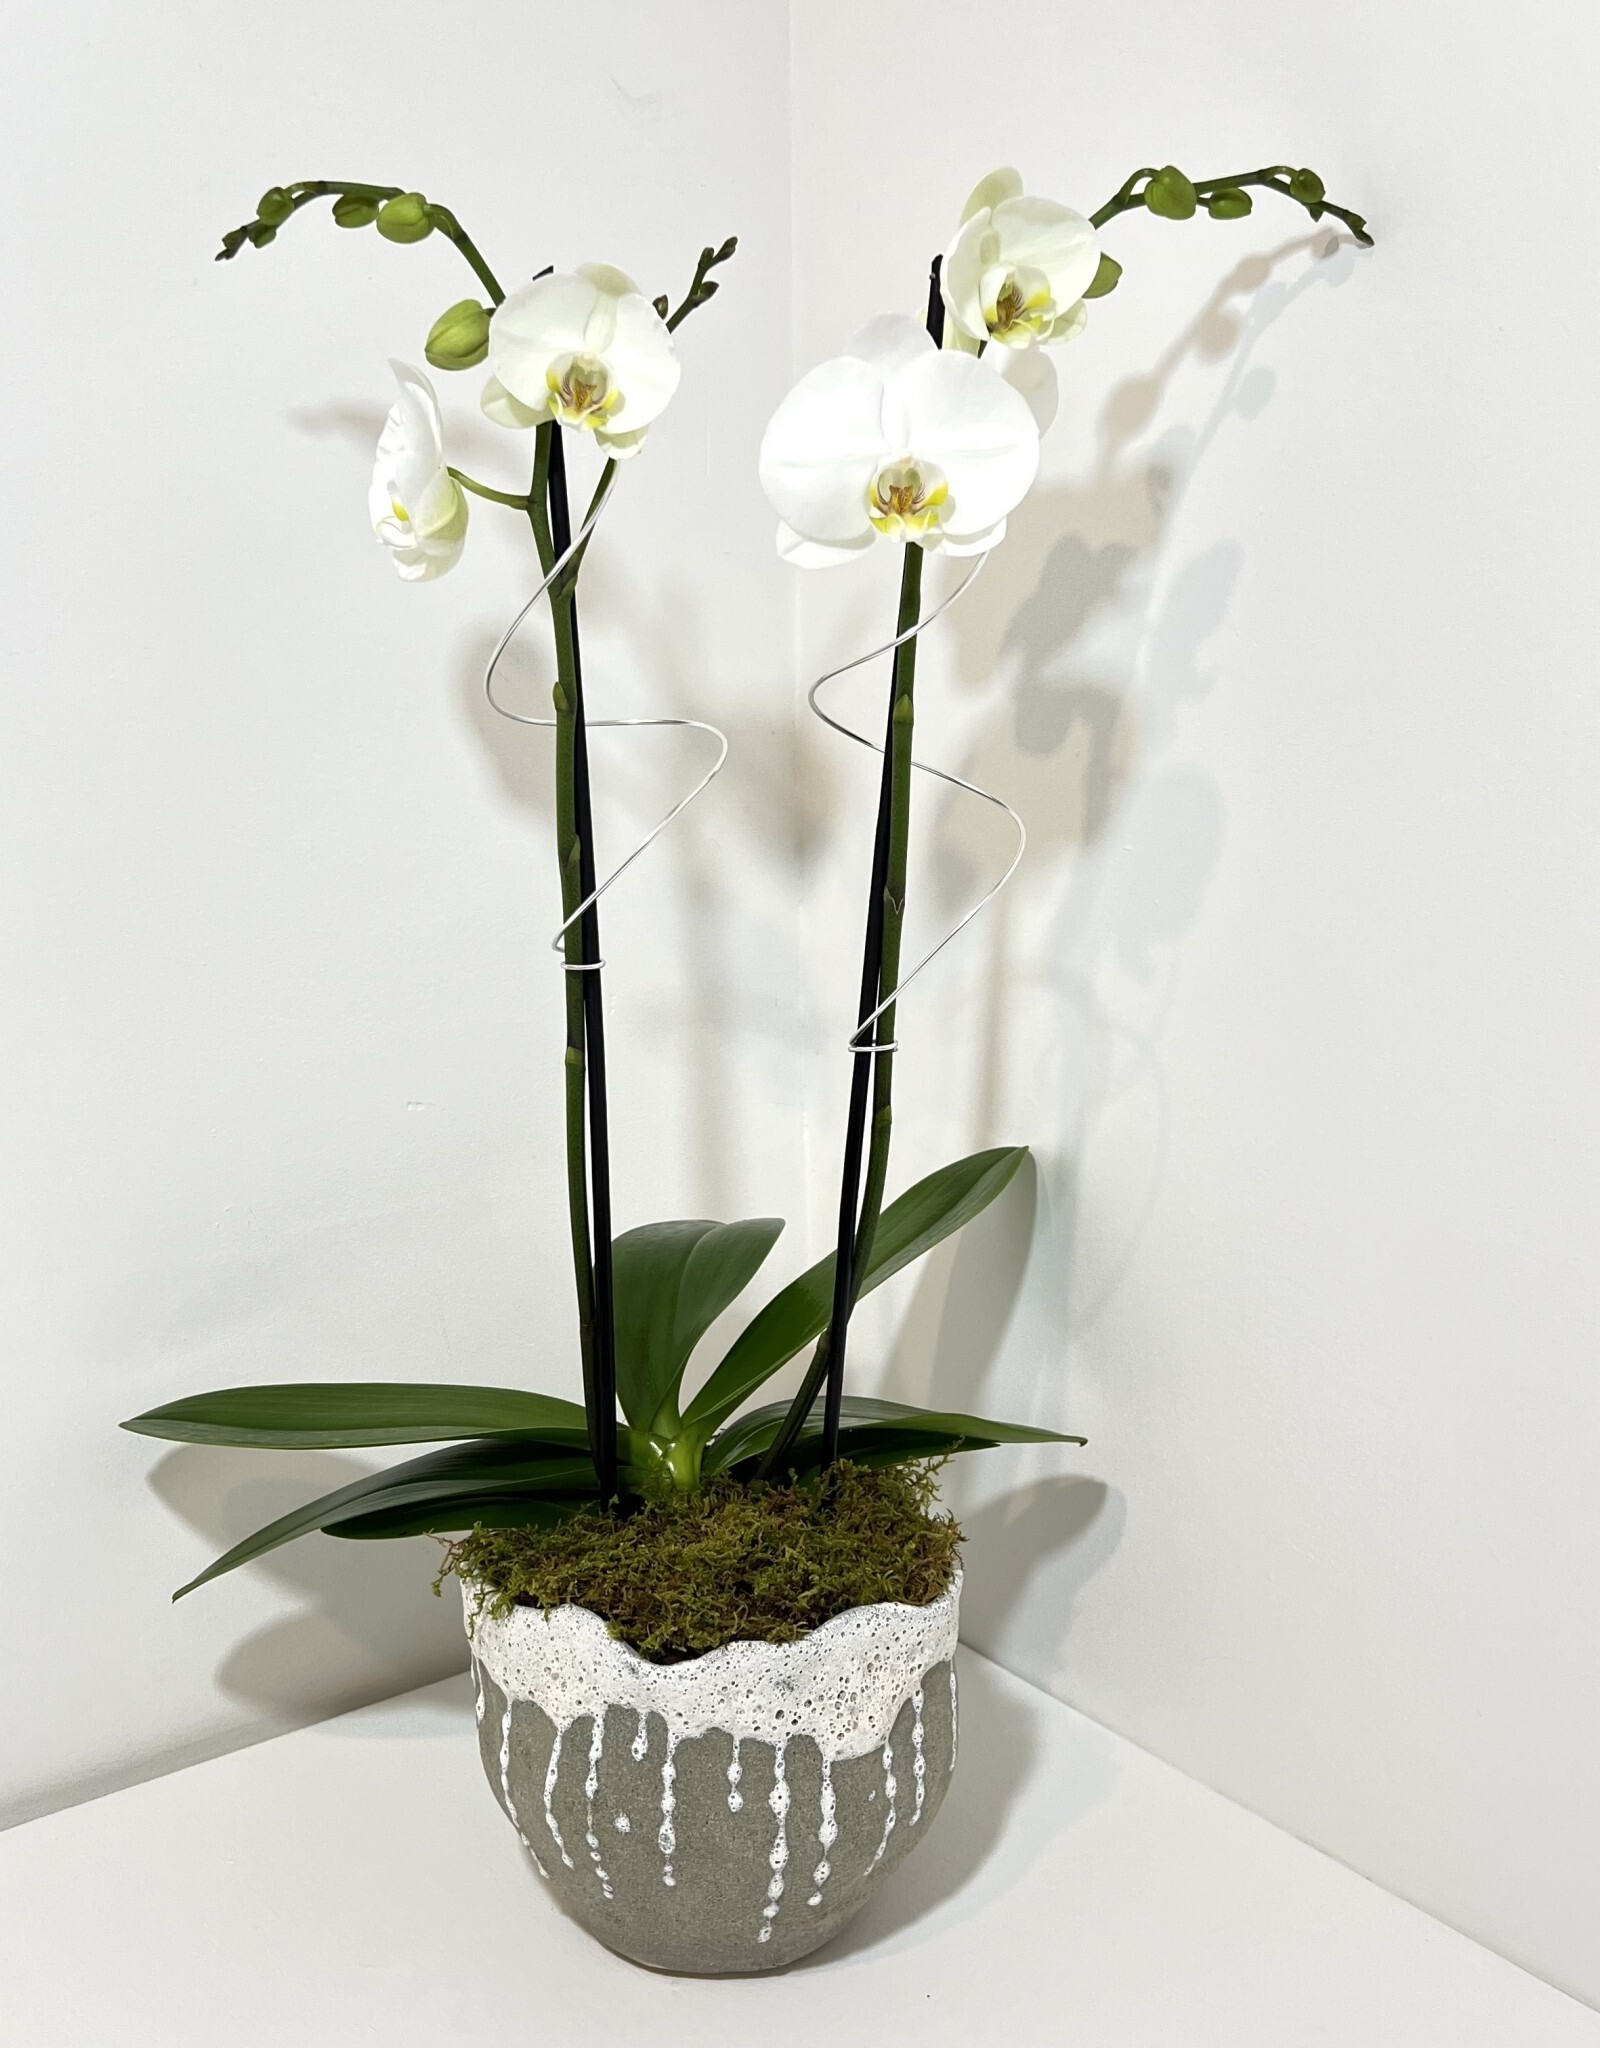 Double Stem White Orchid in Thalassa Pot